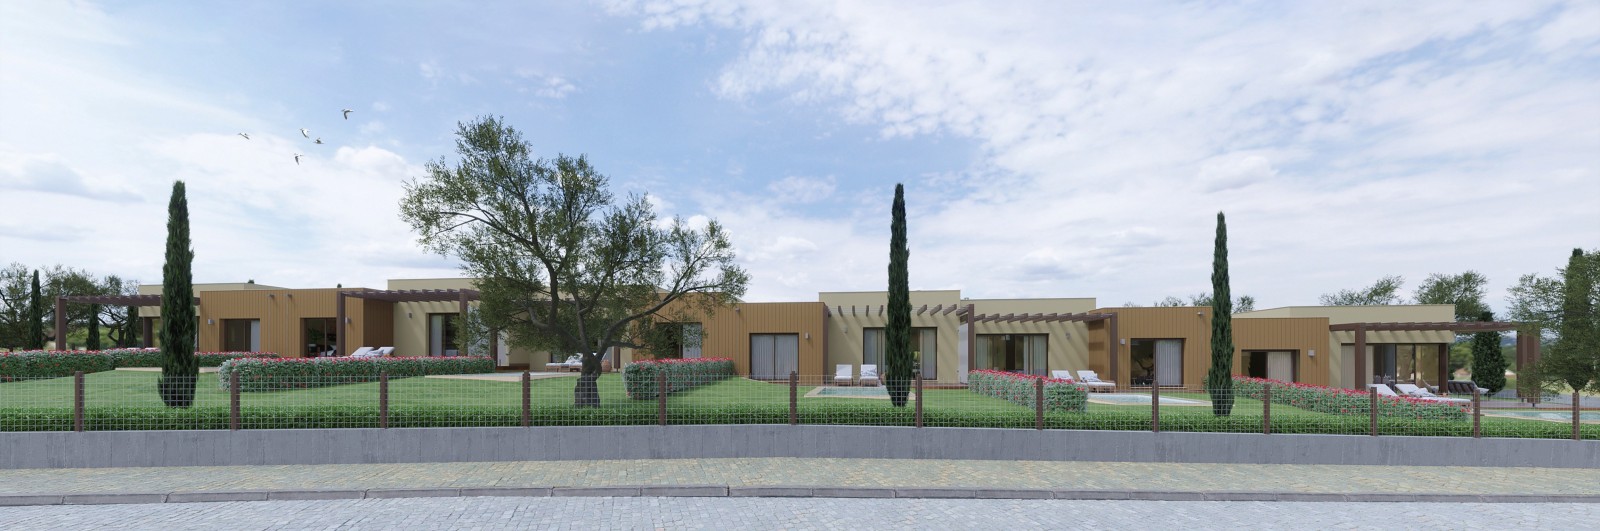 2 bedroom semi-detached villa with swimming pool for sale in Golf resort, Algarve_218823